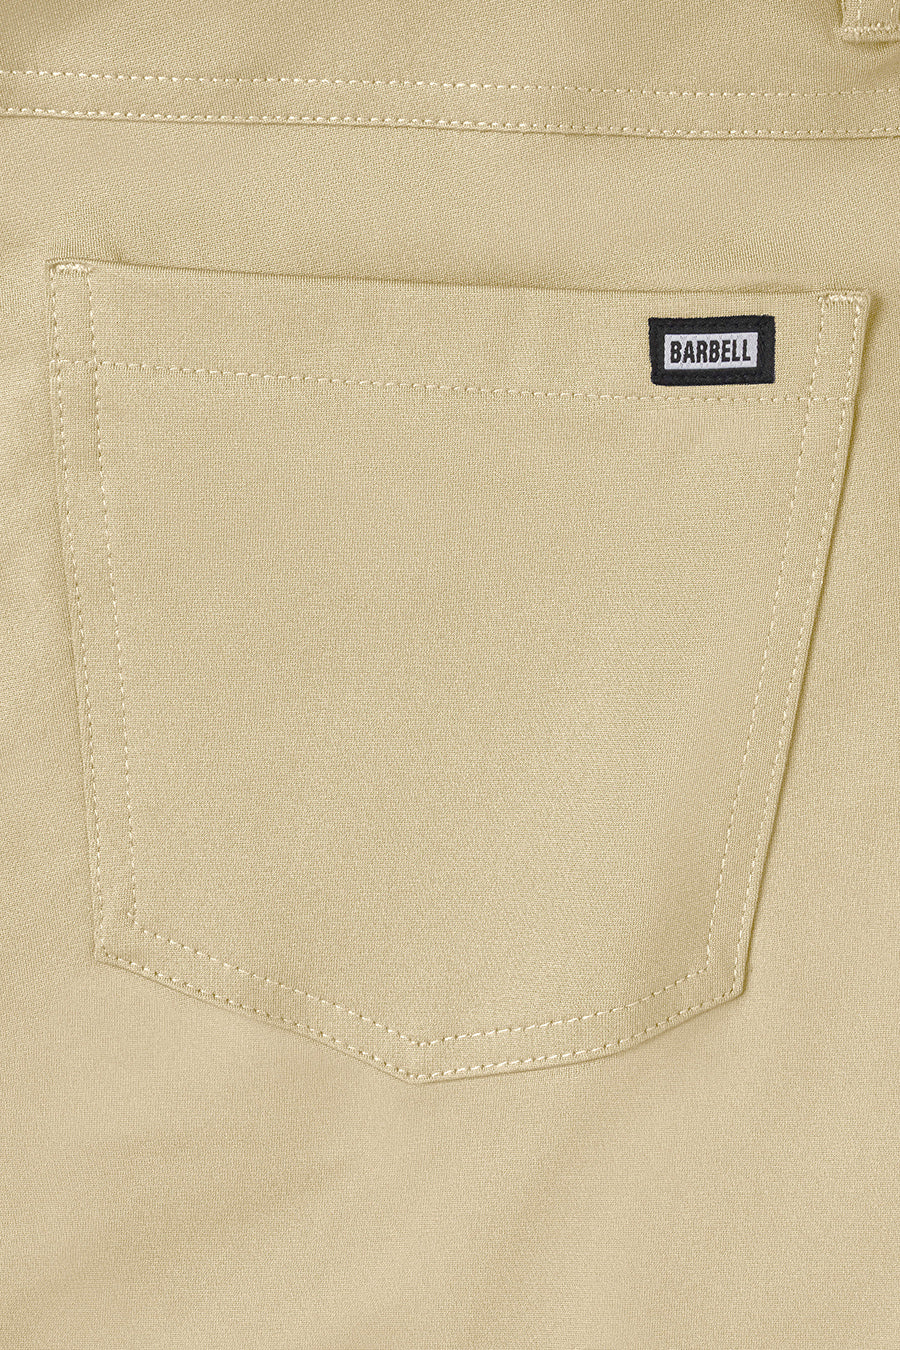 Anything Pant Slim - Khaki - photo from back pocket detail #color_khaki